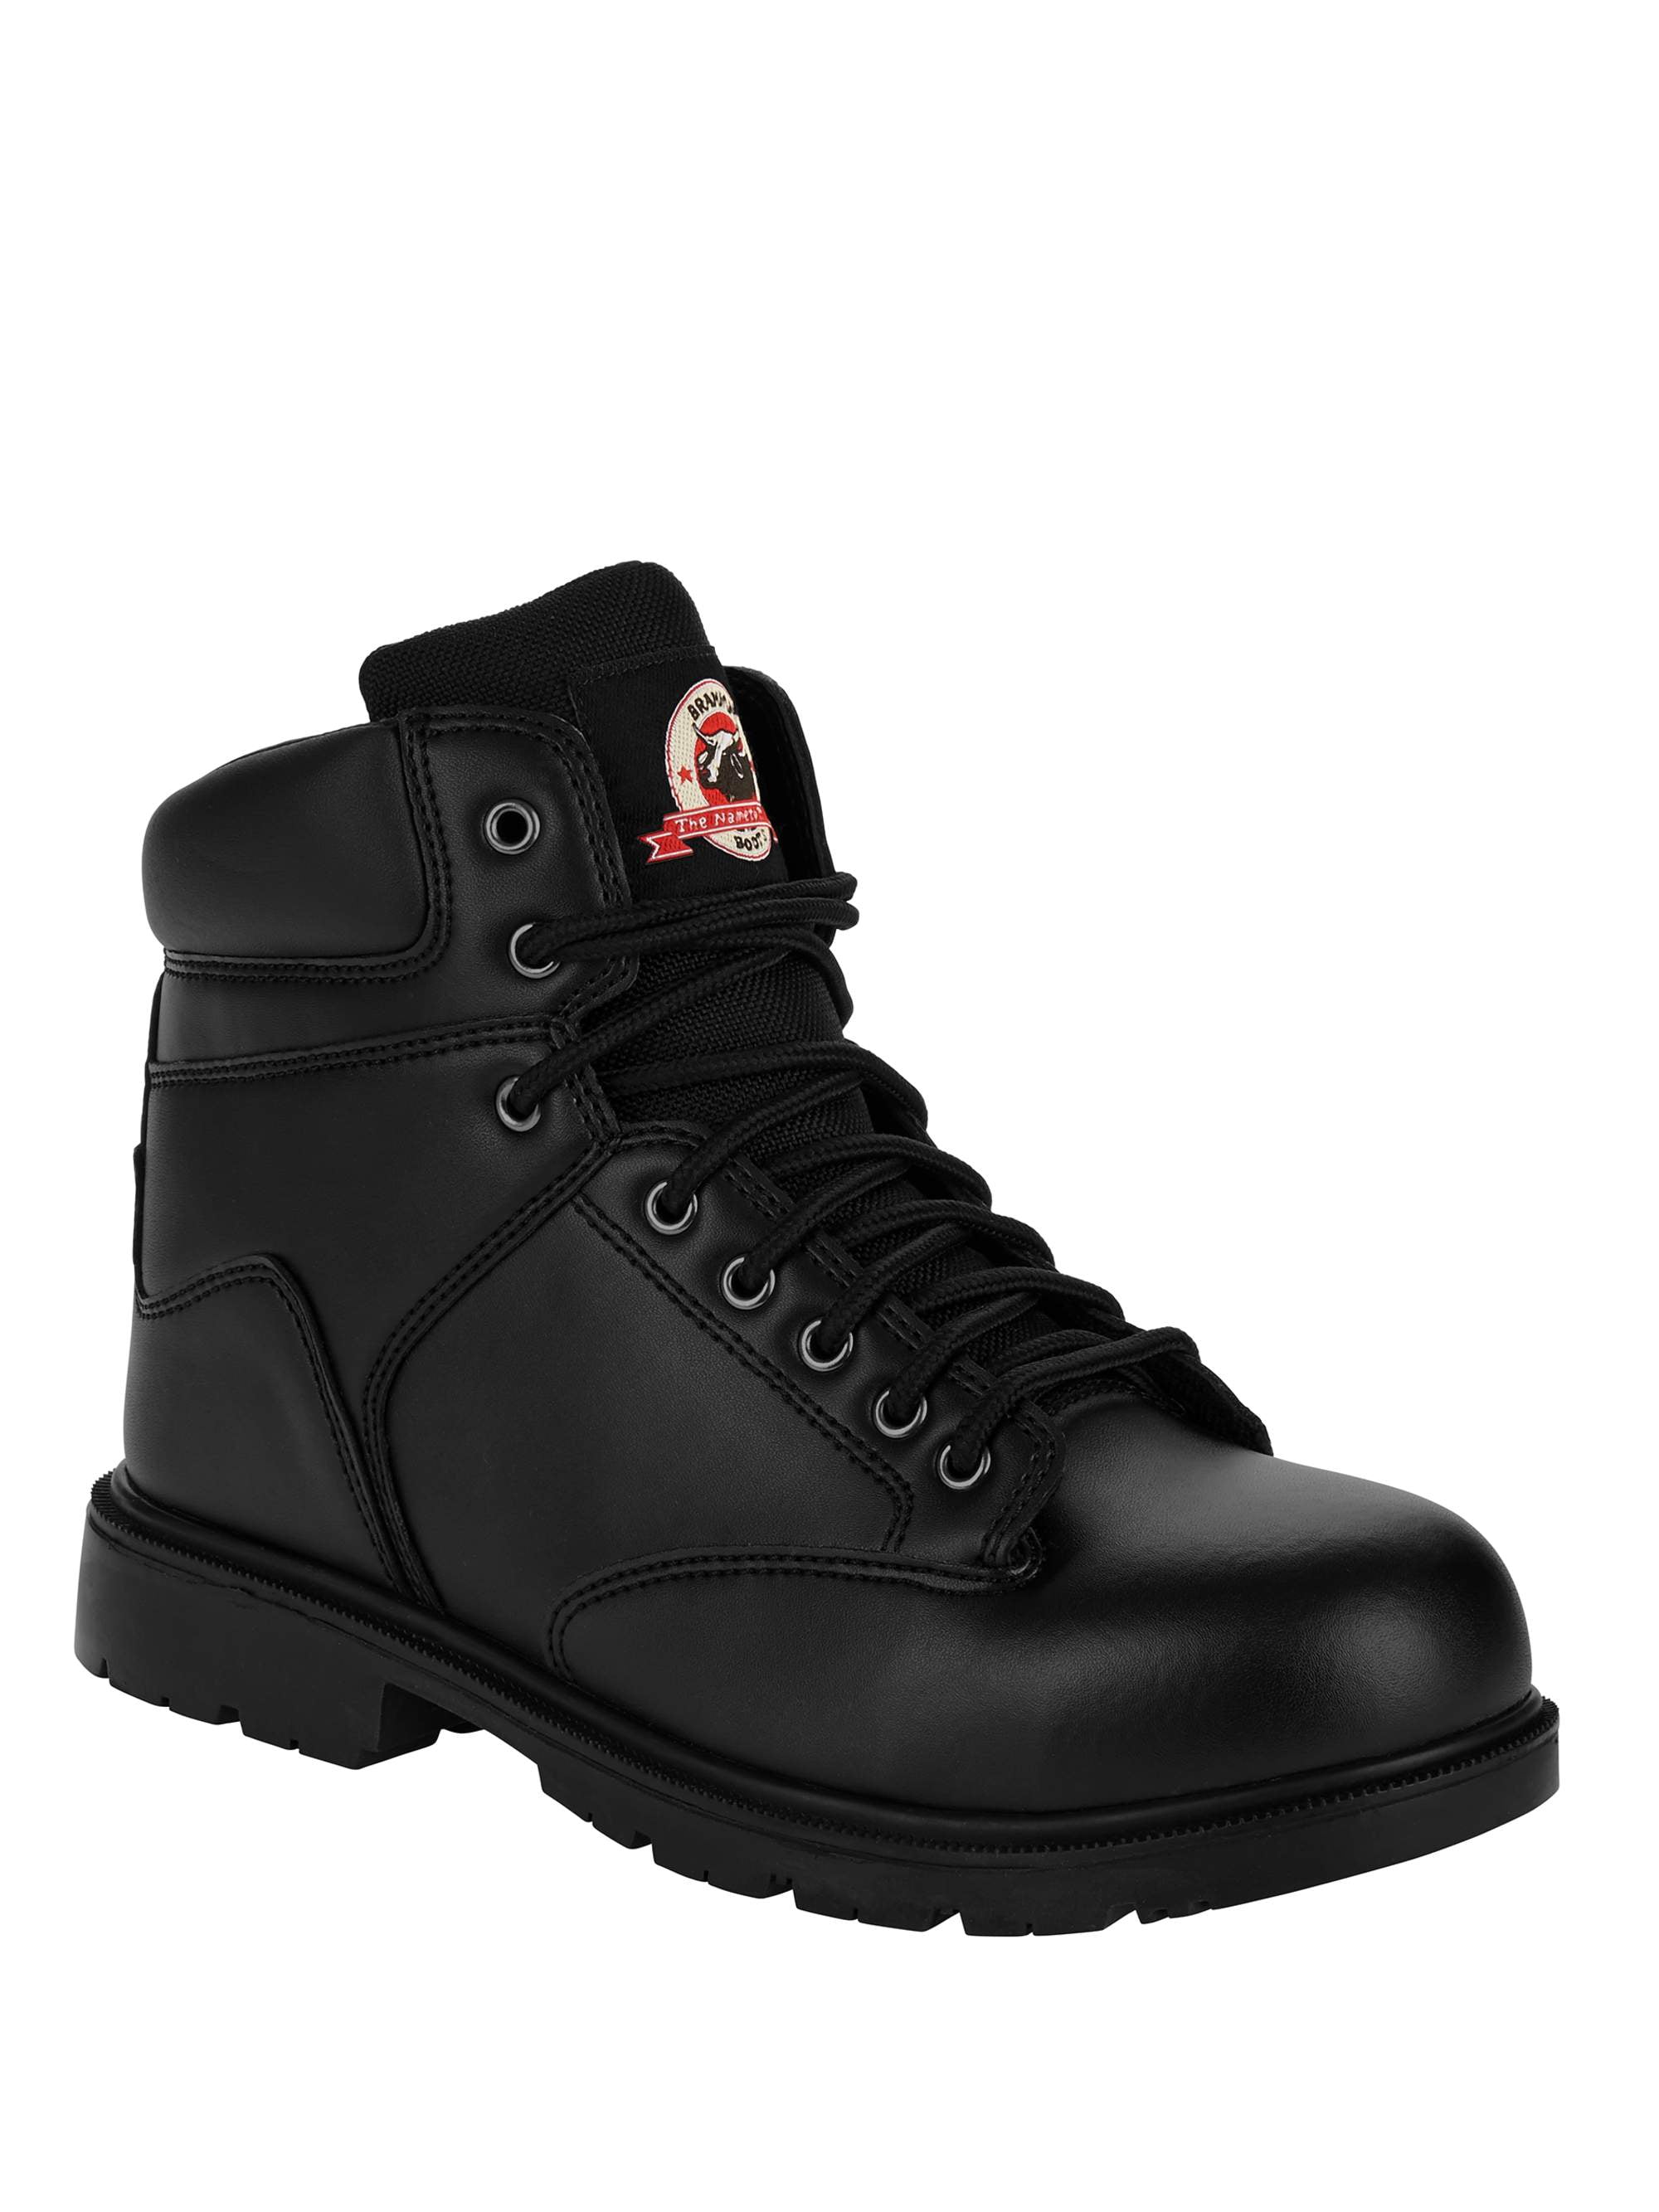 Pro Heavy Duty Hard Wearing Wide Fit Leather Mens Safety Work Boots Steel Toe 